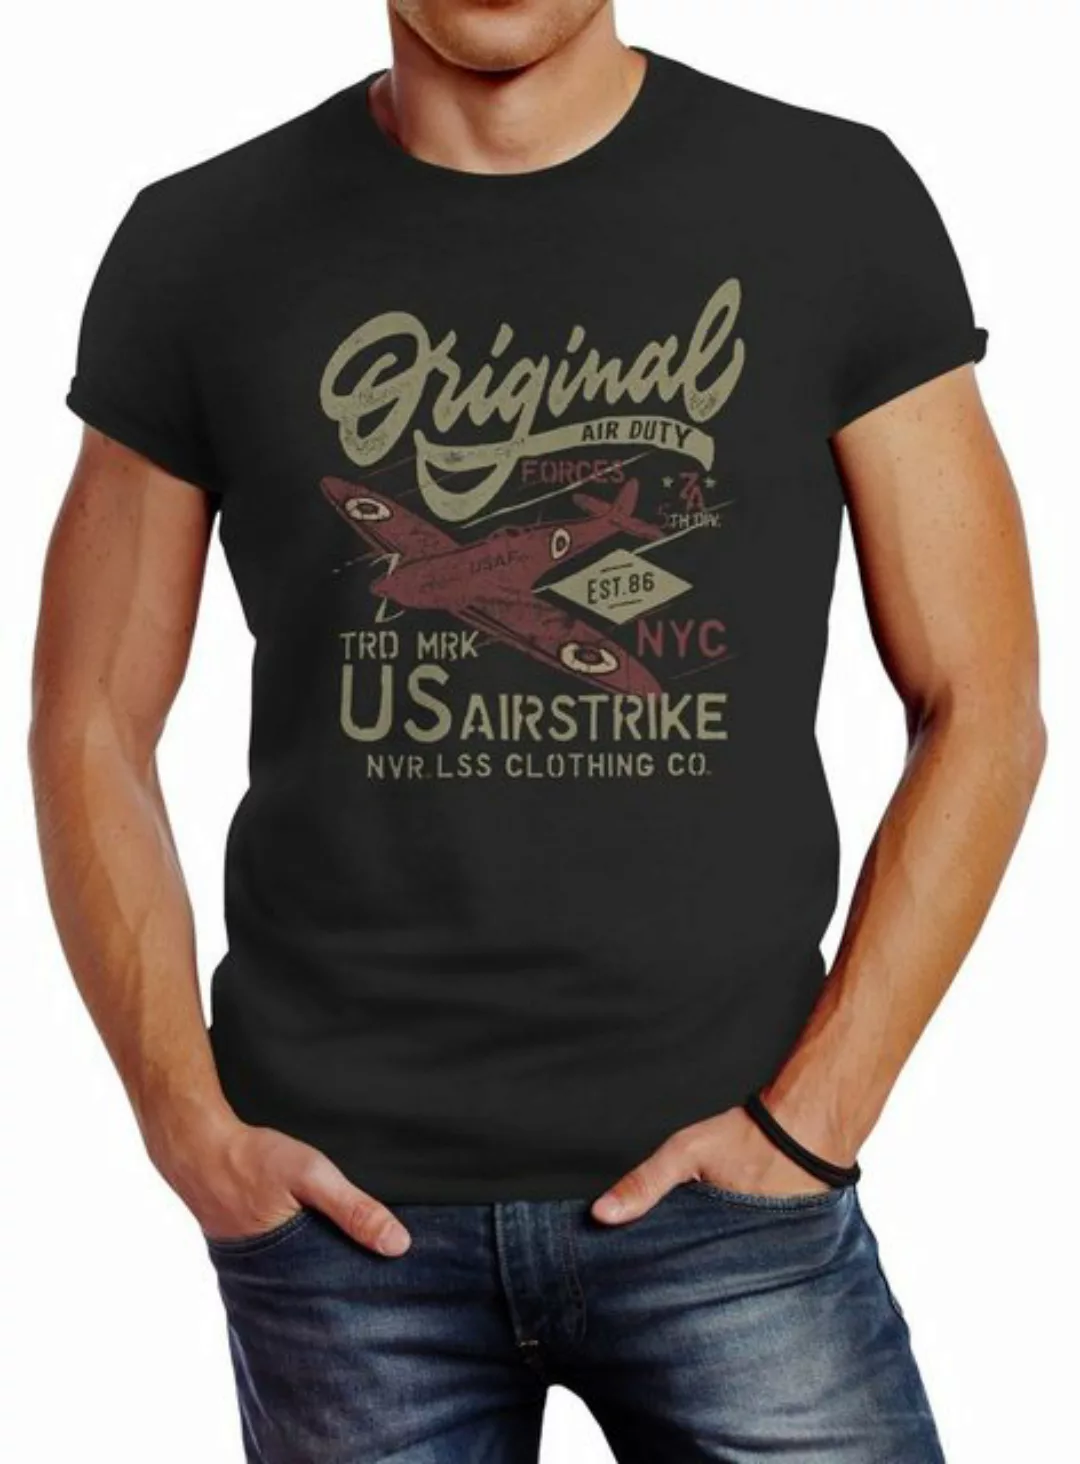 Neverless Print-Shirt Herren T-Shirt US Airforce Army Motiv Spitfire Flugze günstig online kaufen